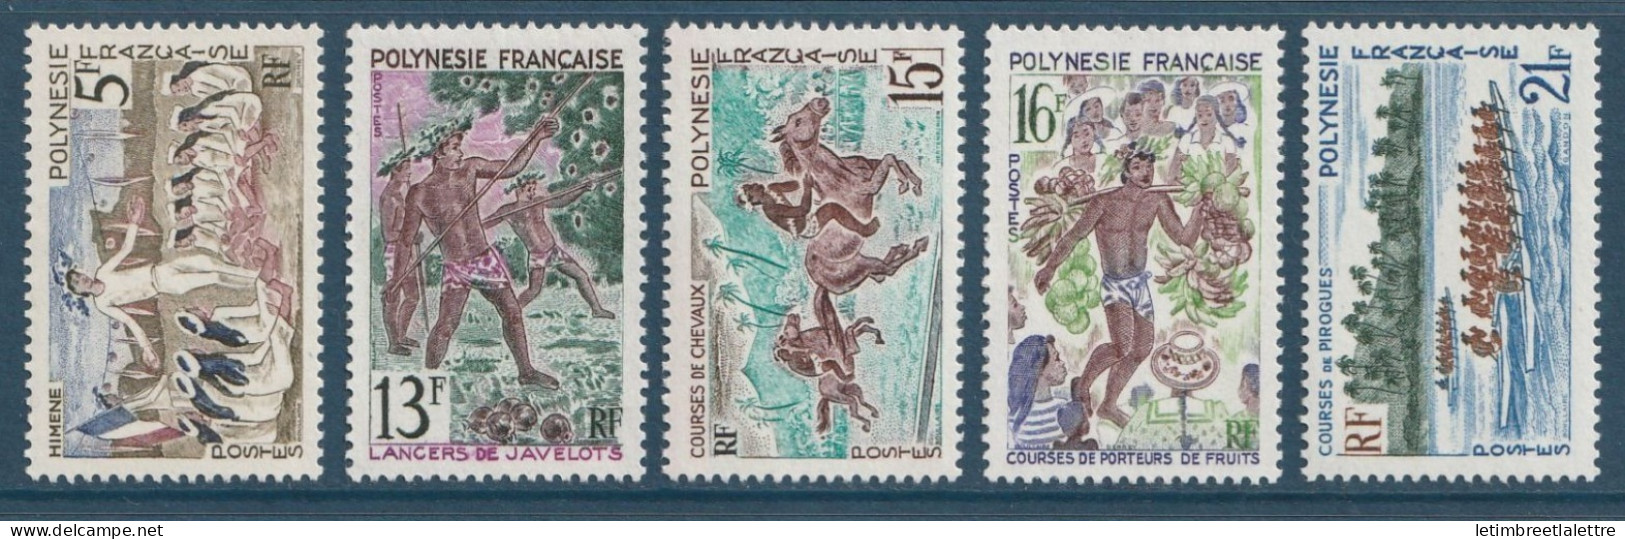 Polynésie - YT N° 47 à 51 ** - Neuf Sans Charnière - 1967 - Neufs